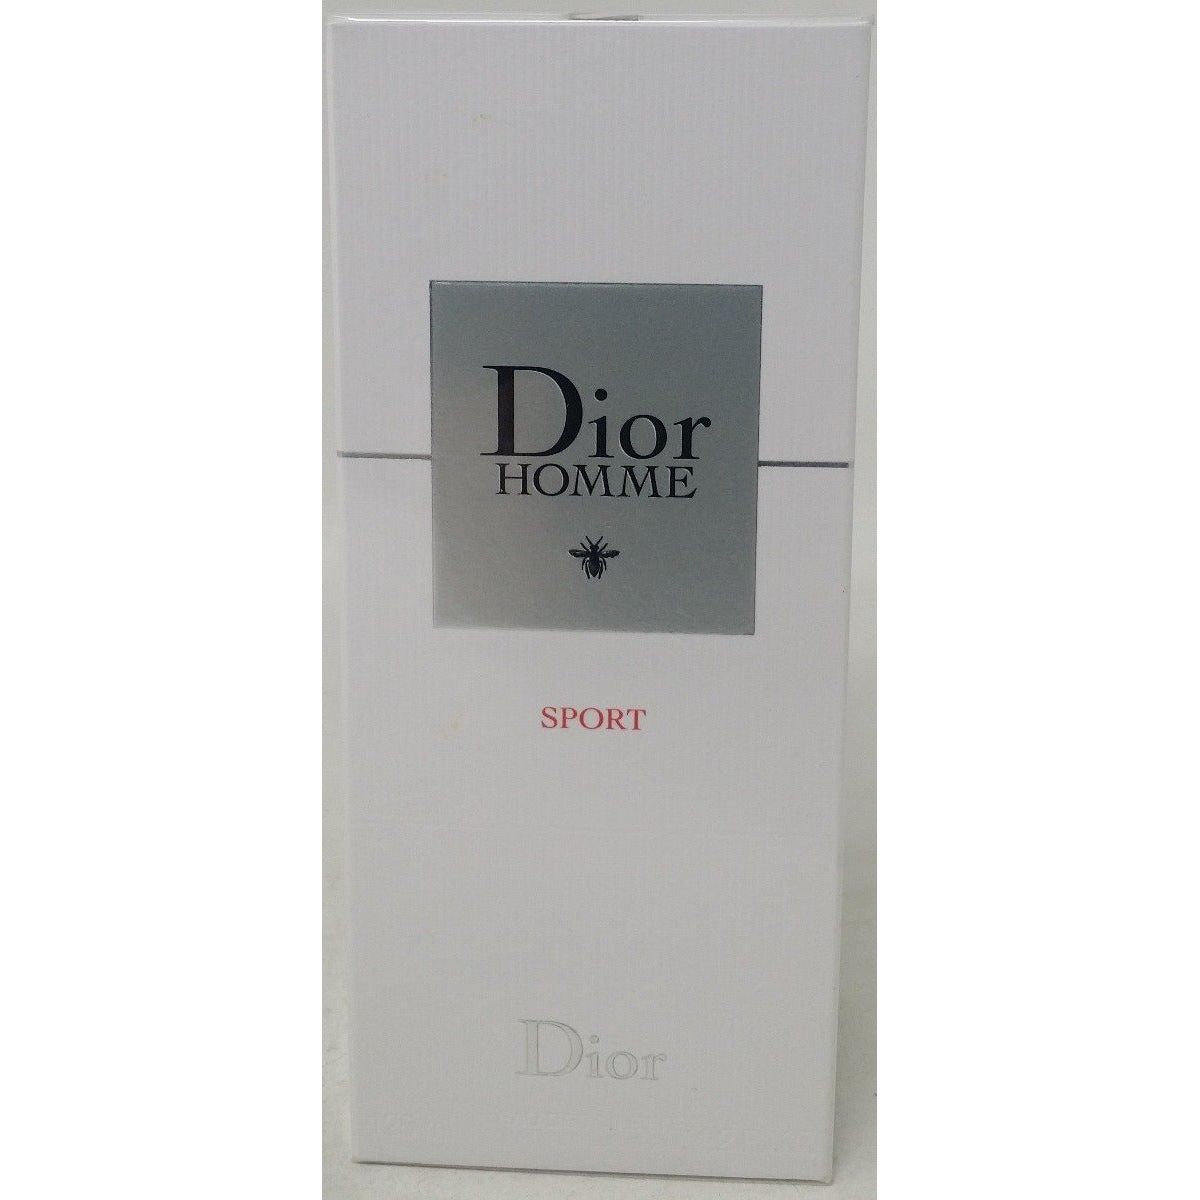 Dior Homme Sport Cologne Gift Set for Men 3 Pieces  Walmartcom